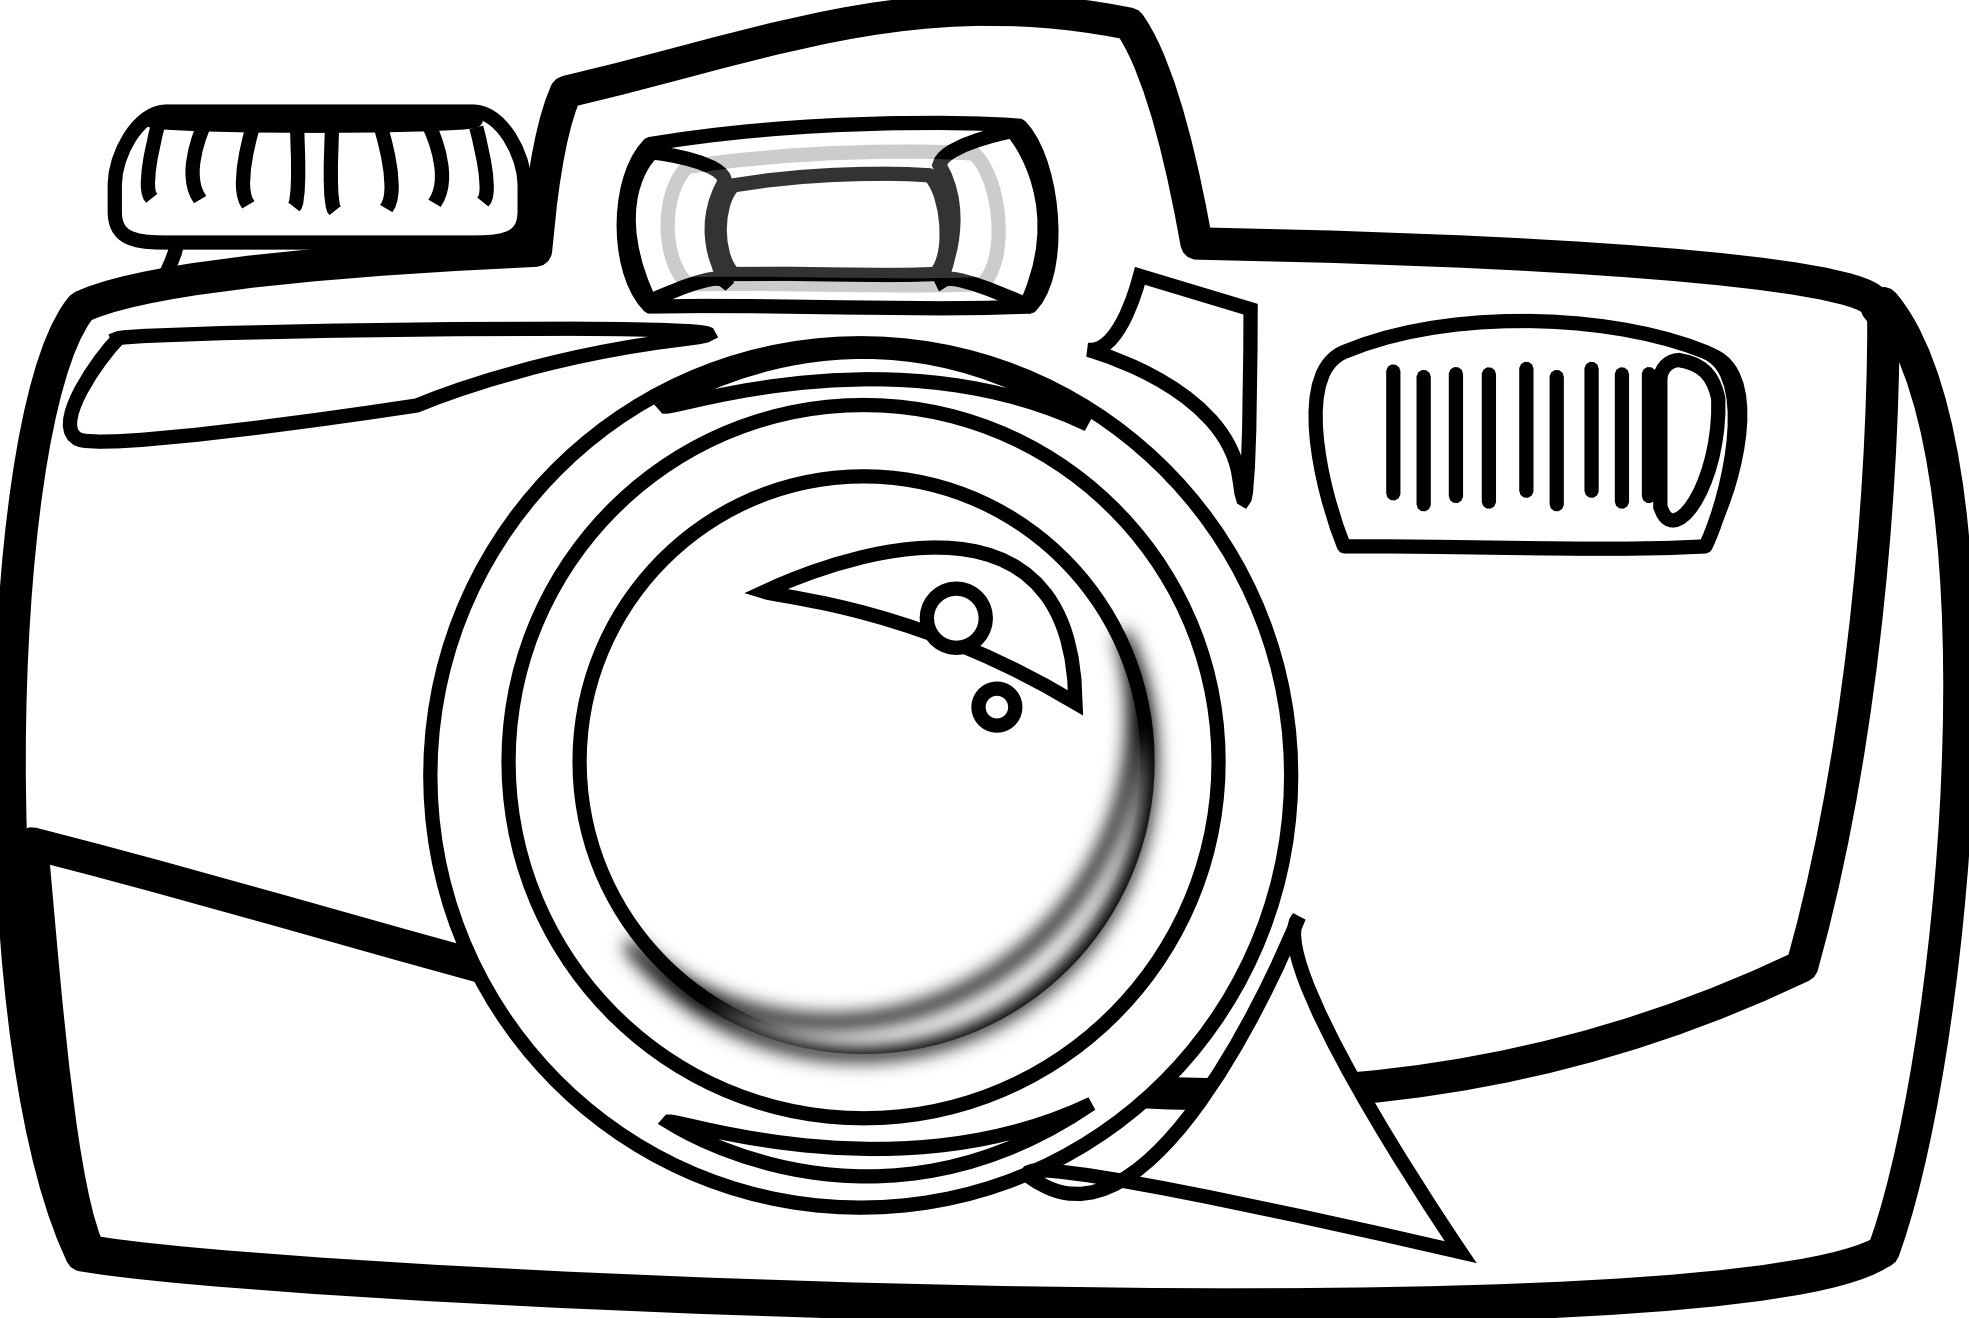 Camera cartoon clipart